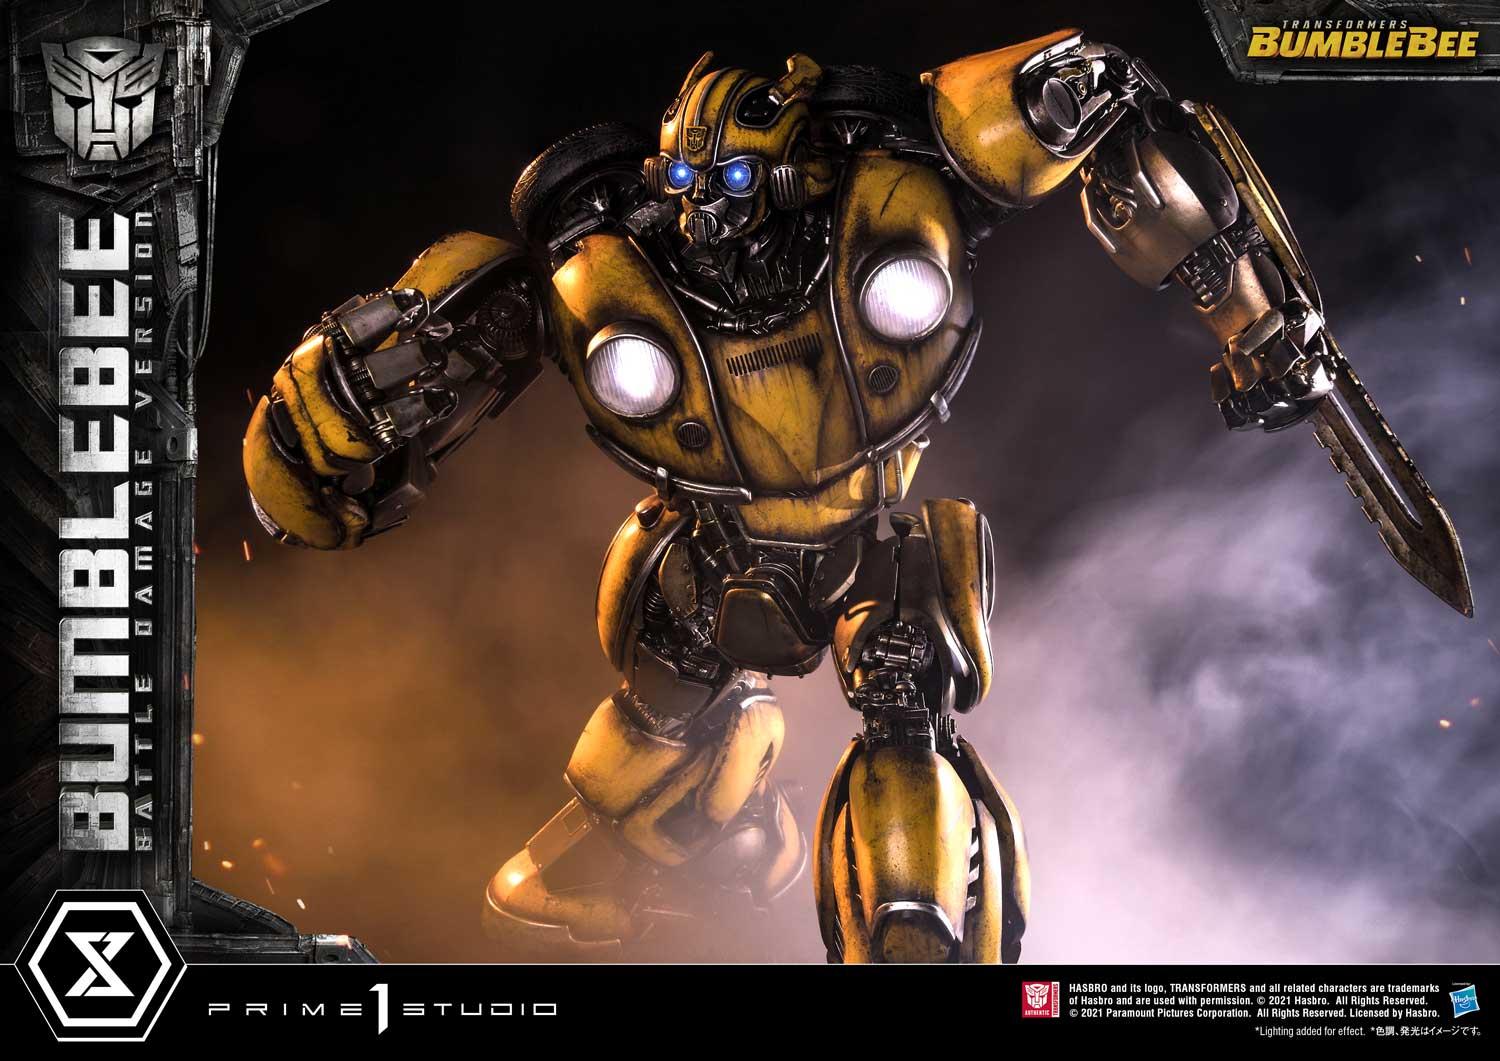 Transformers Prime: 19/11 – Bumblebee entra em crise